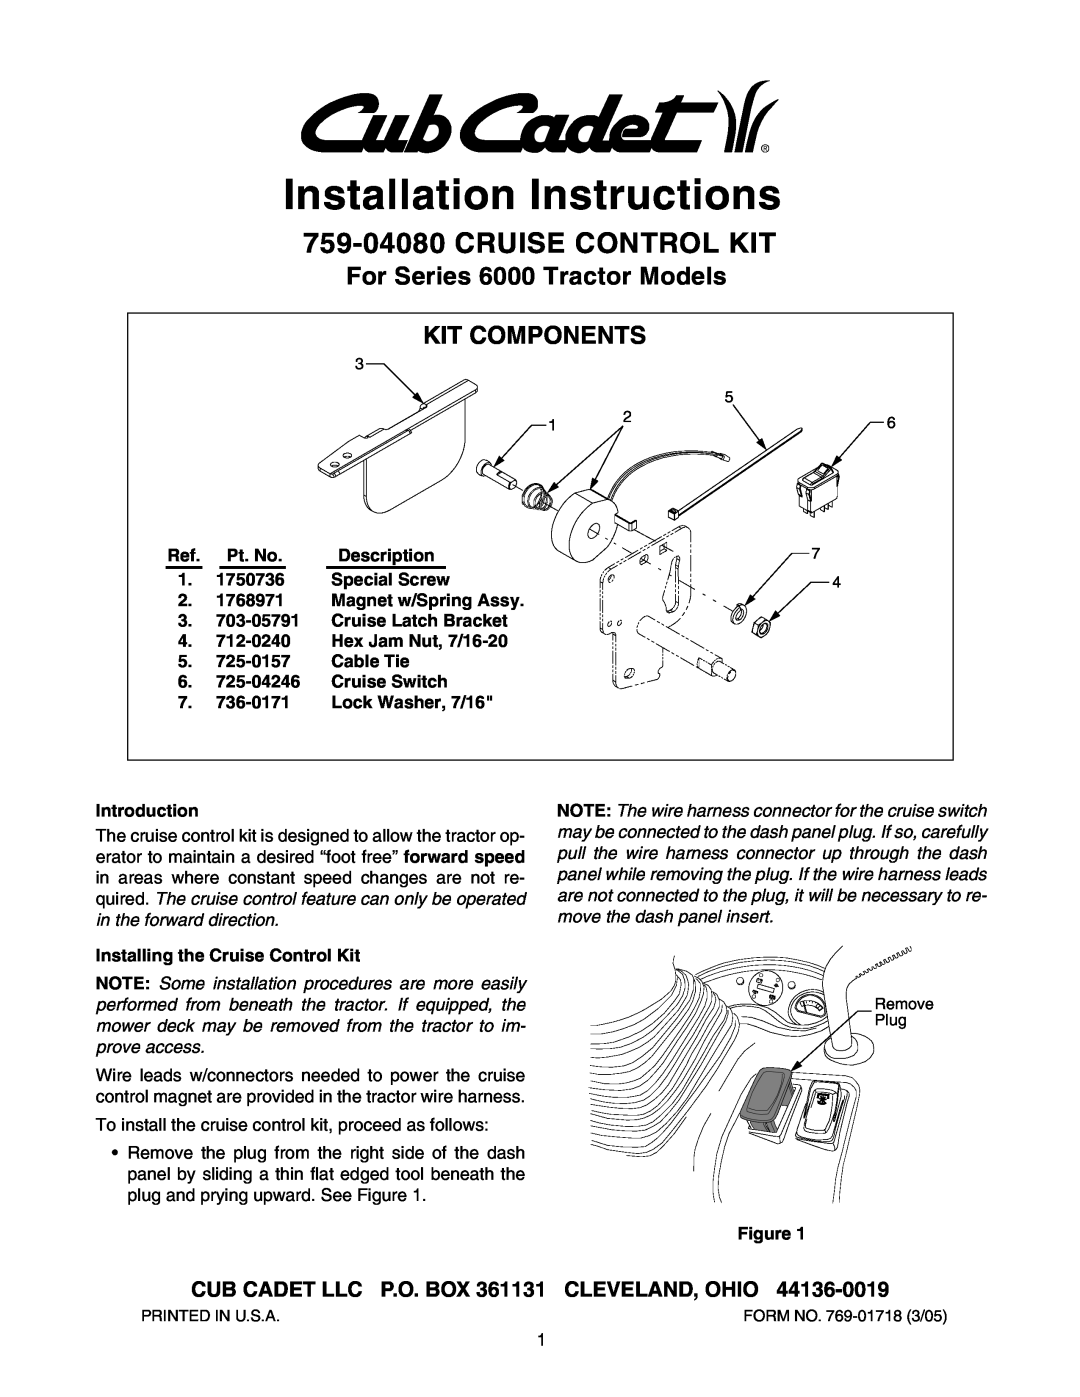 Cub Cadet 759-04080 installation instructions Installation Instructions, Cruise Control Kit 